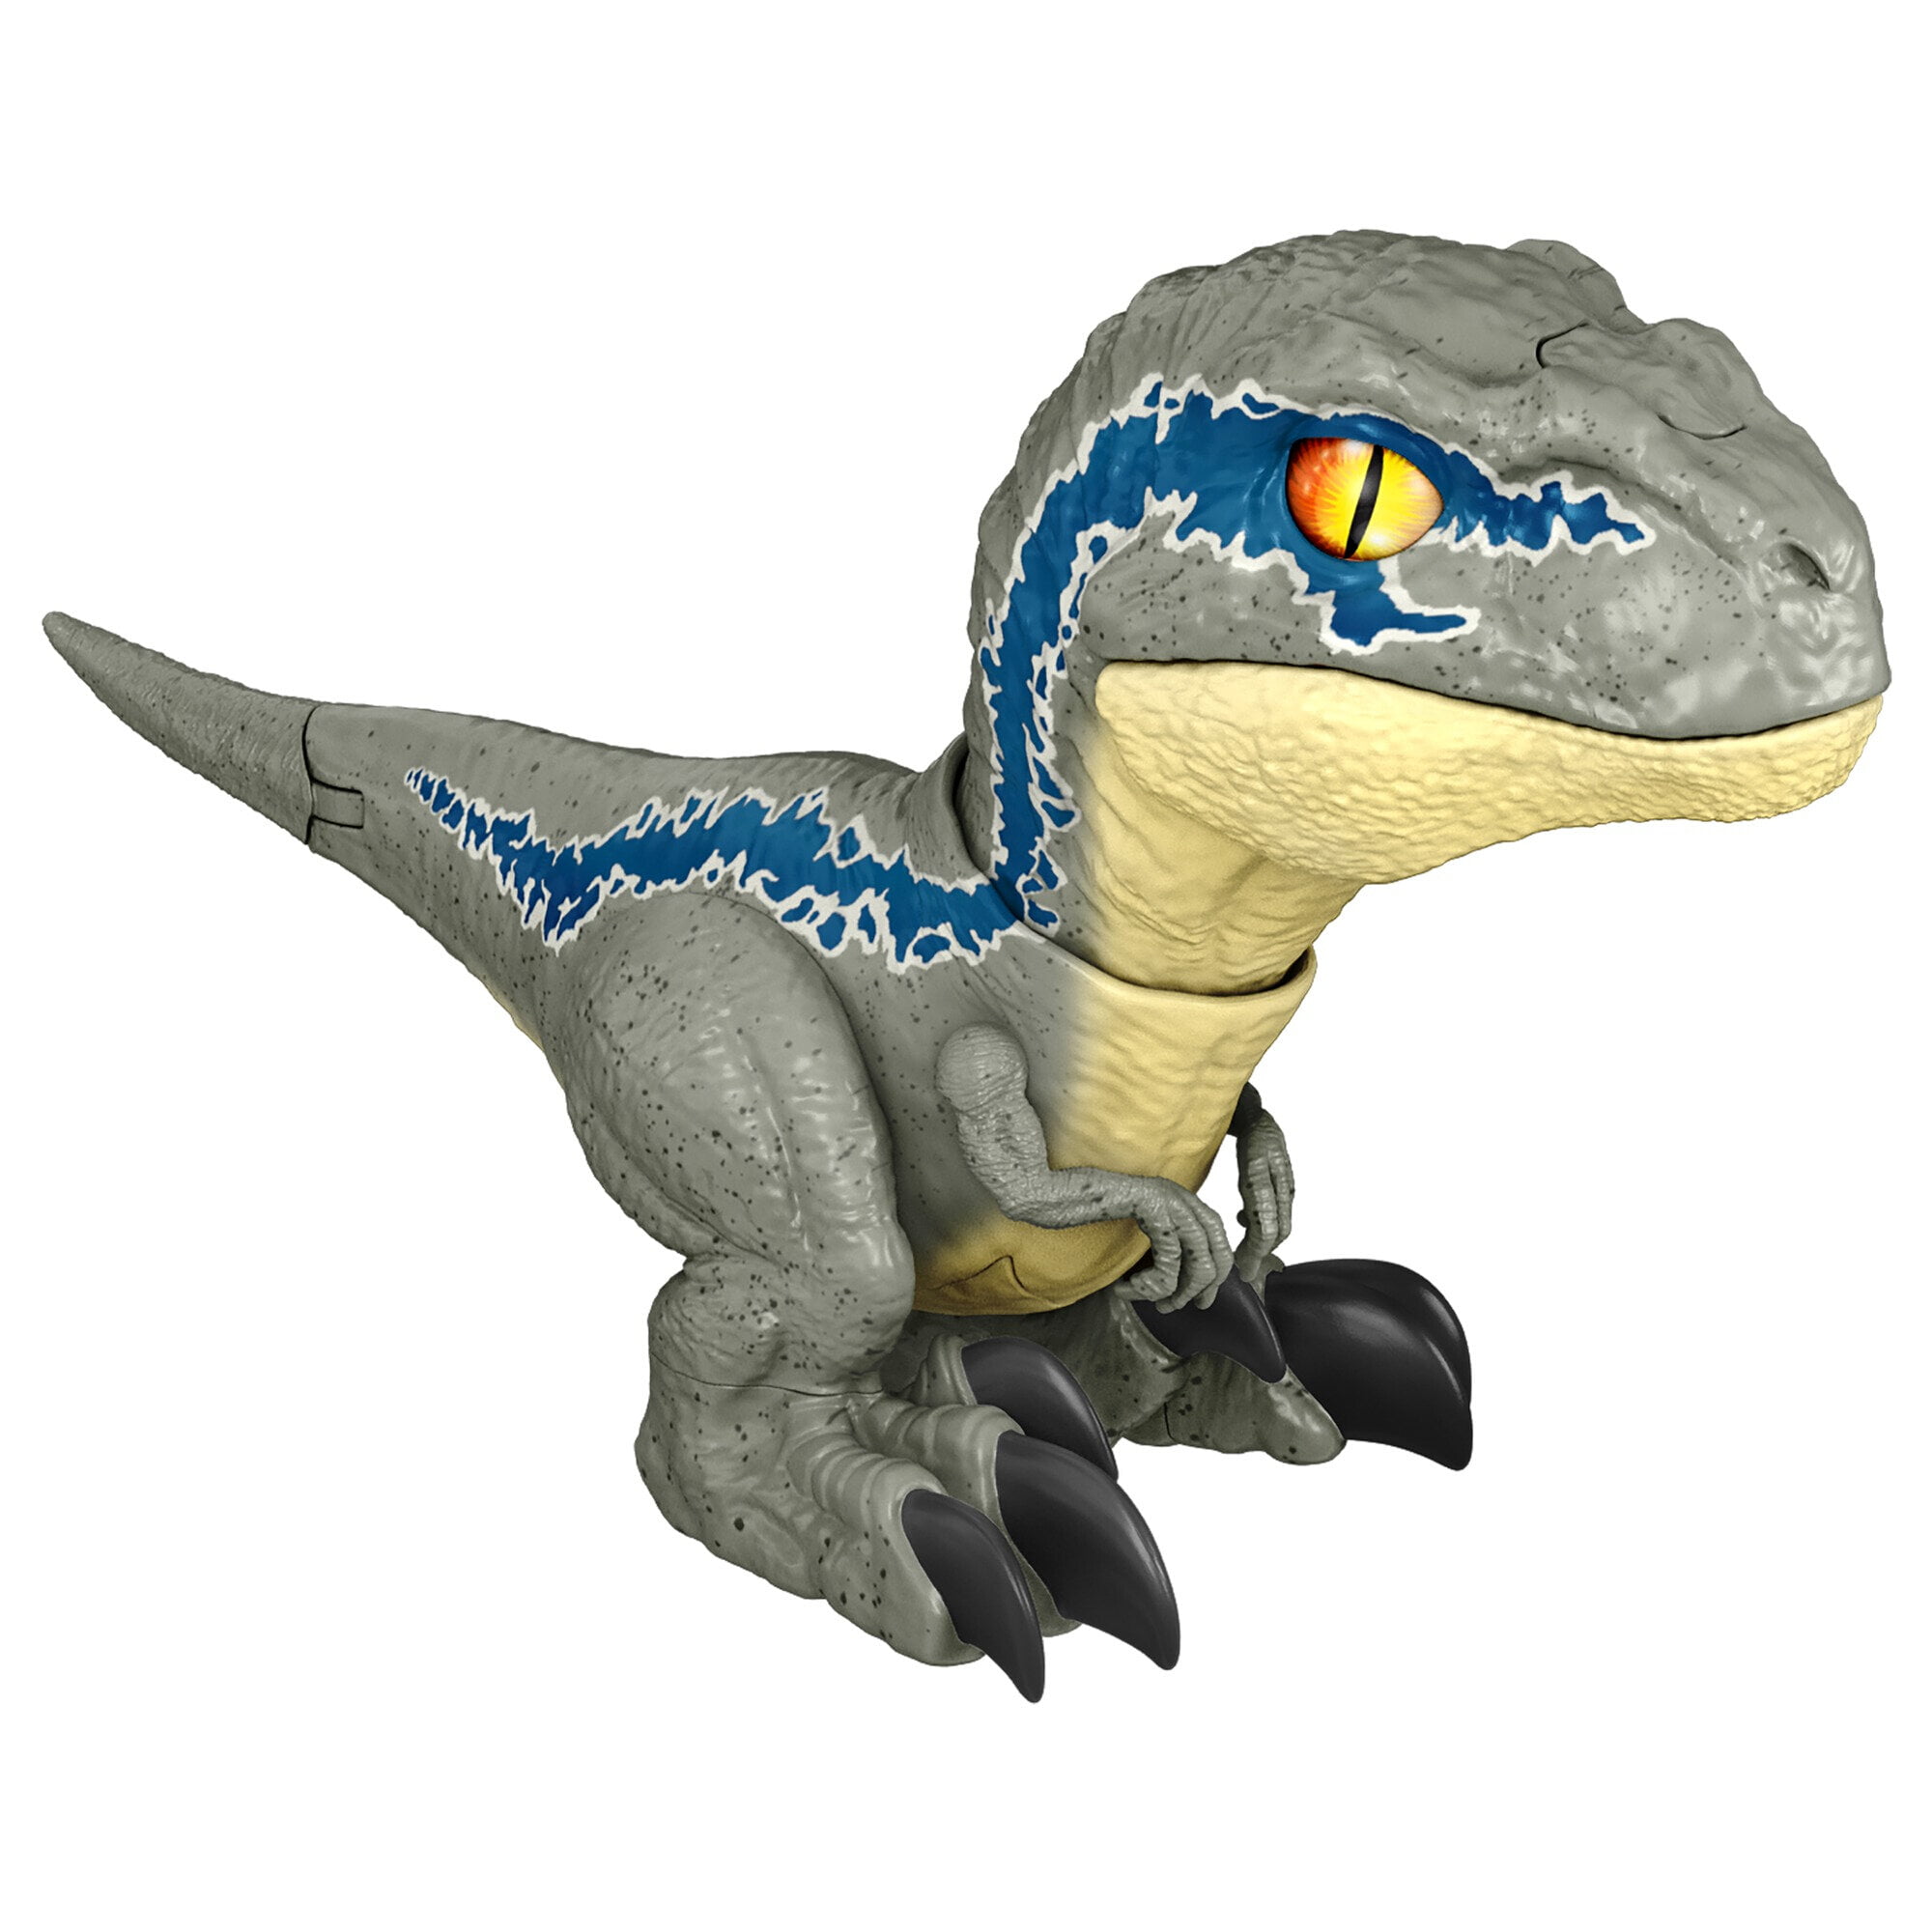 Velociraptor Raptor Triceratops 2 x Dinosaurs Toys Educational Model Kids Gift 